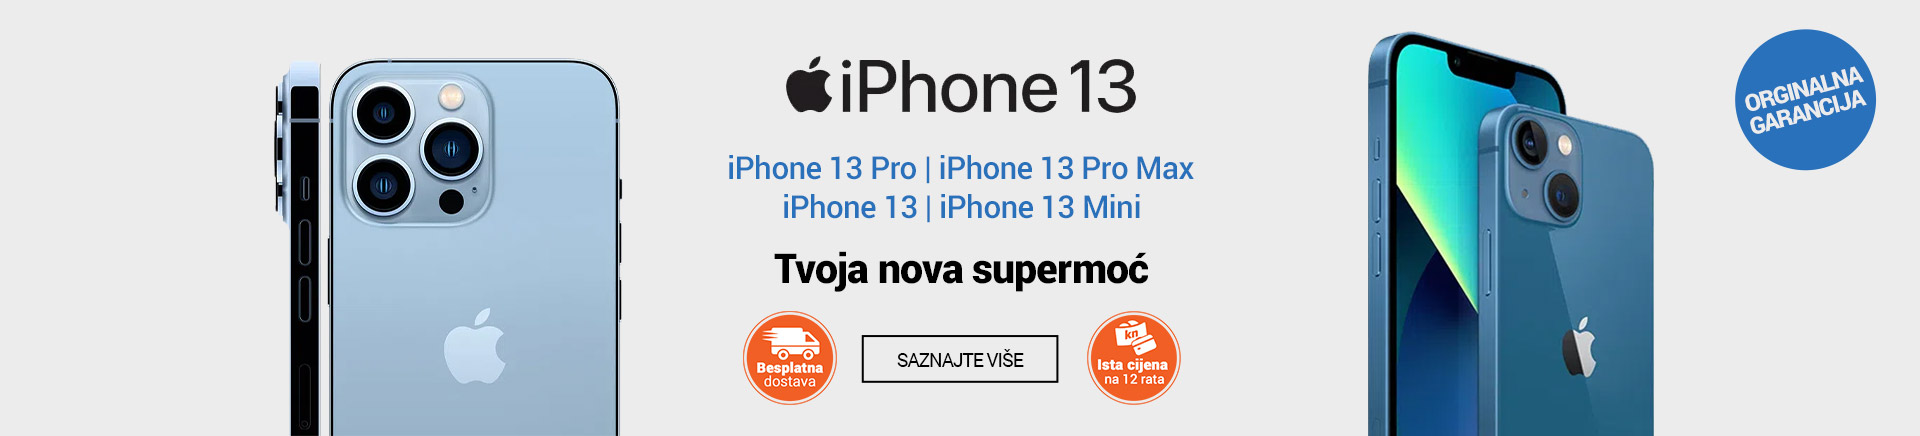 BA iPhone 13 Pro TABLET 768 X 436.jpg